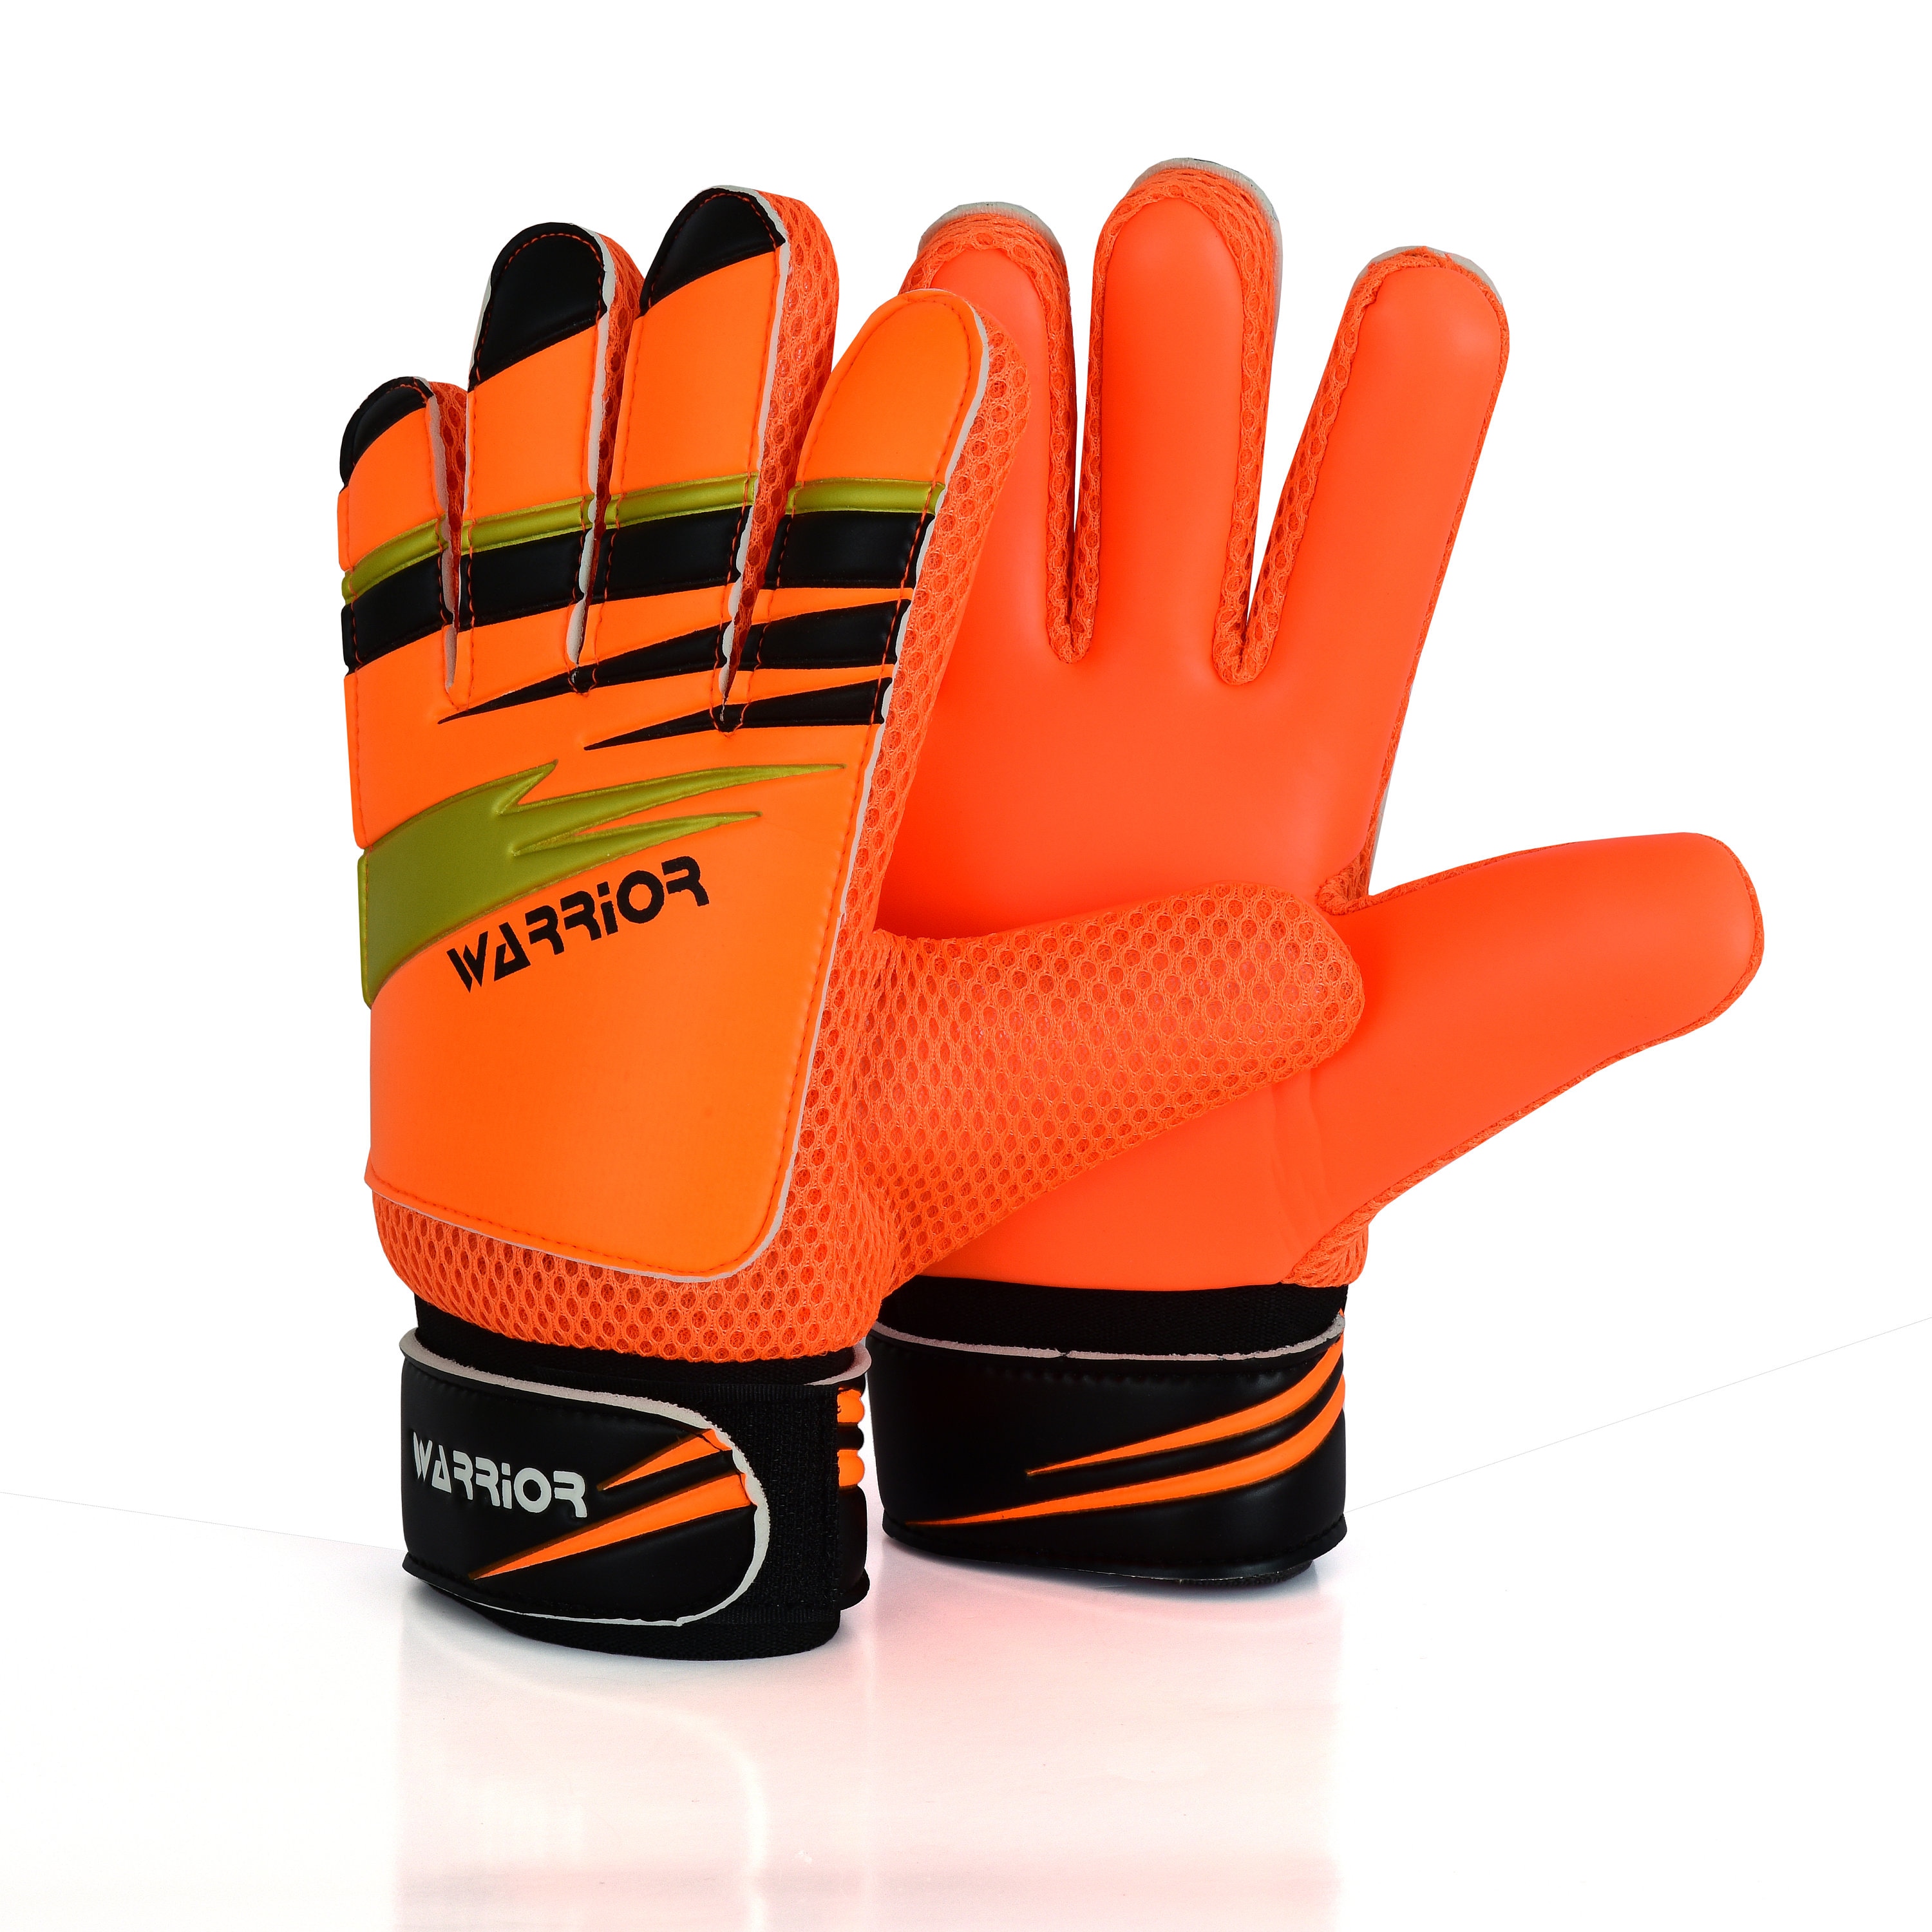 Adult Football Goalkeeper Goalie Soccer Gloves Premier League NEW WARRIOR Kids 